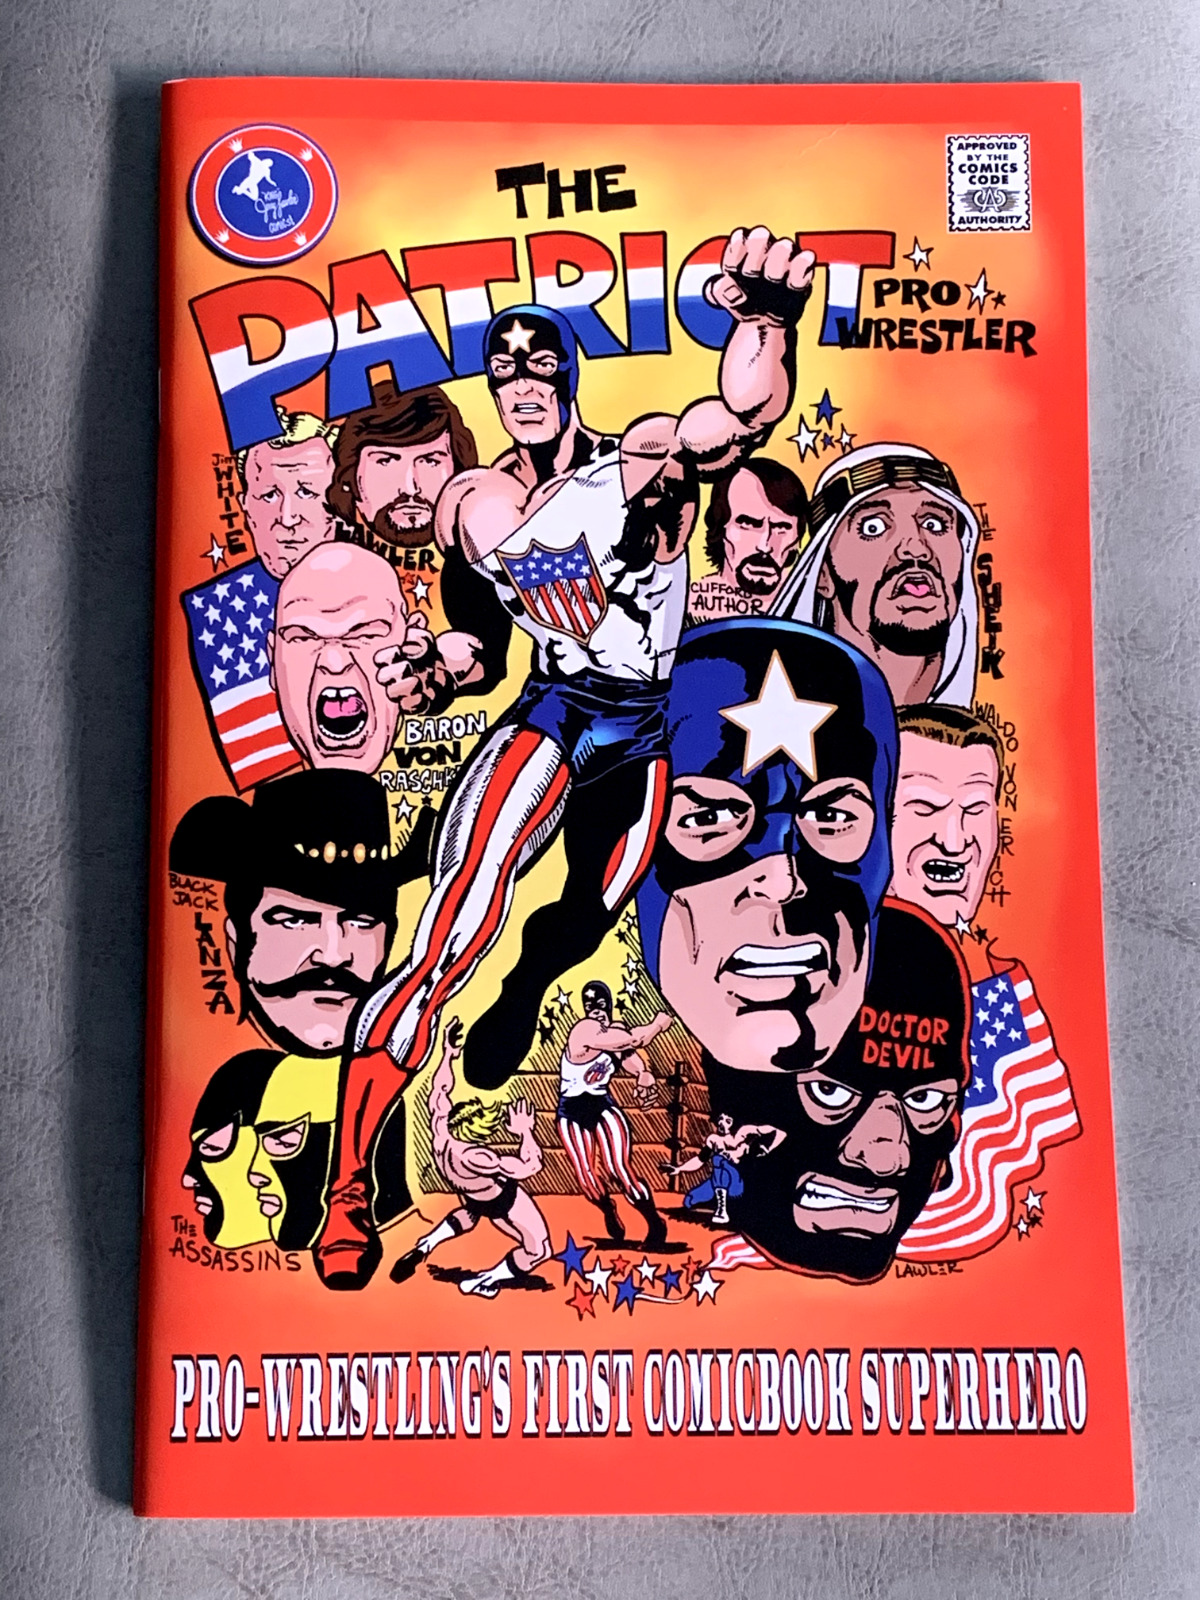 KING Jerry Lawler 1971 comic THE PATRIOT Memphis MSG Magazine WWE Wrestlemania